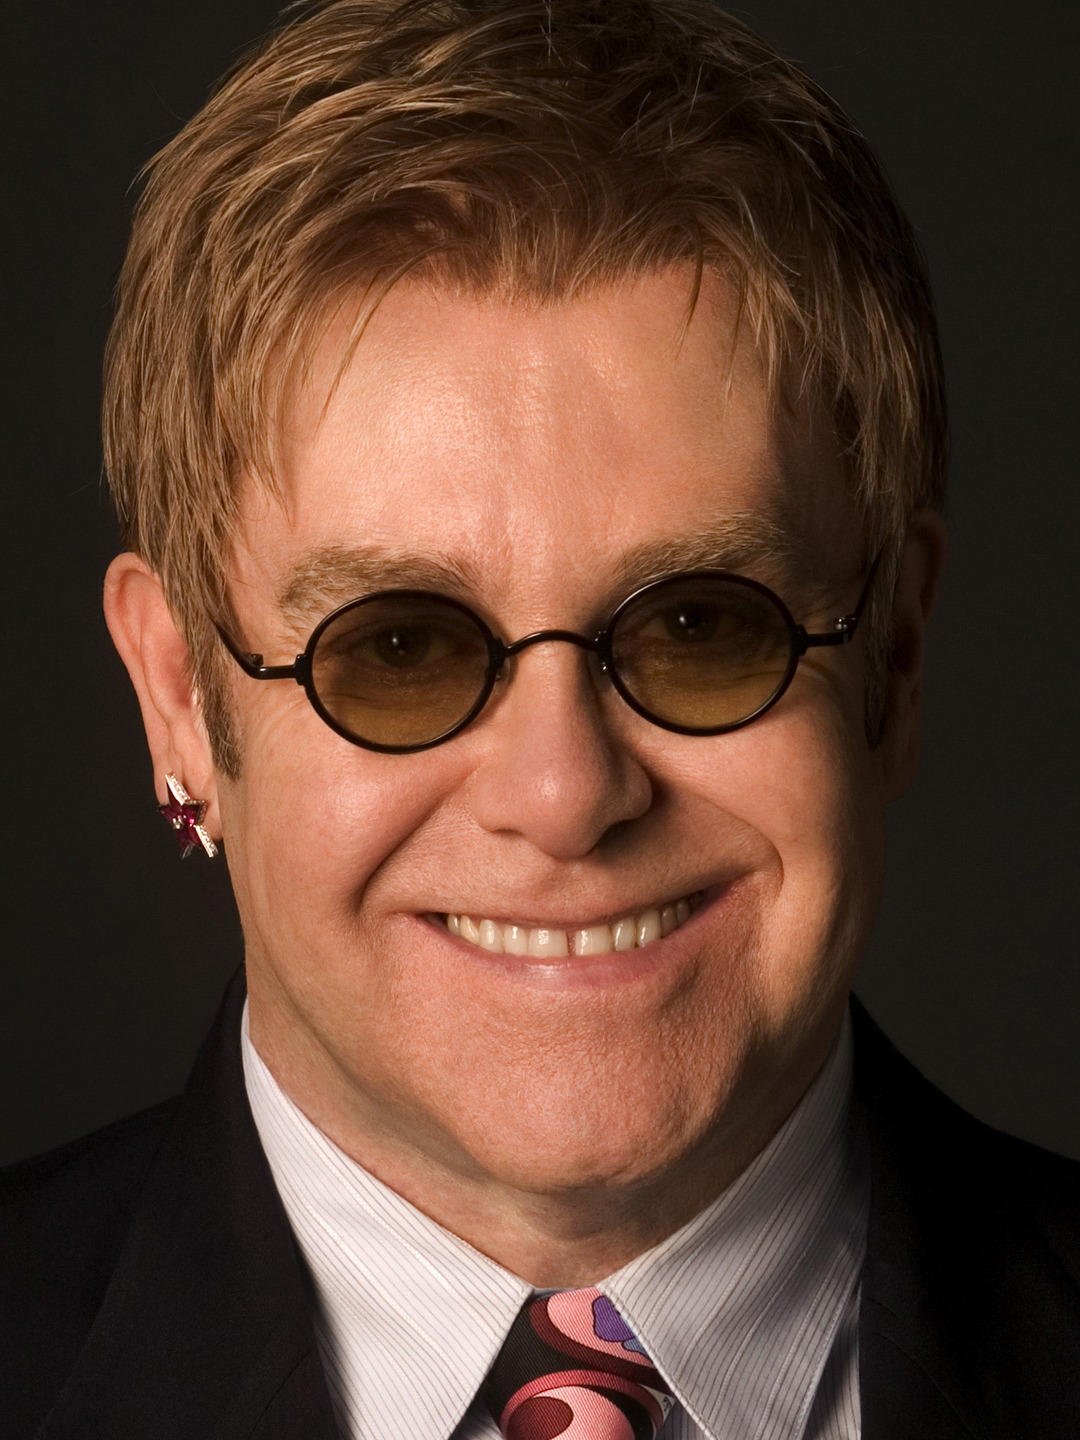 Elton John upbringing